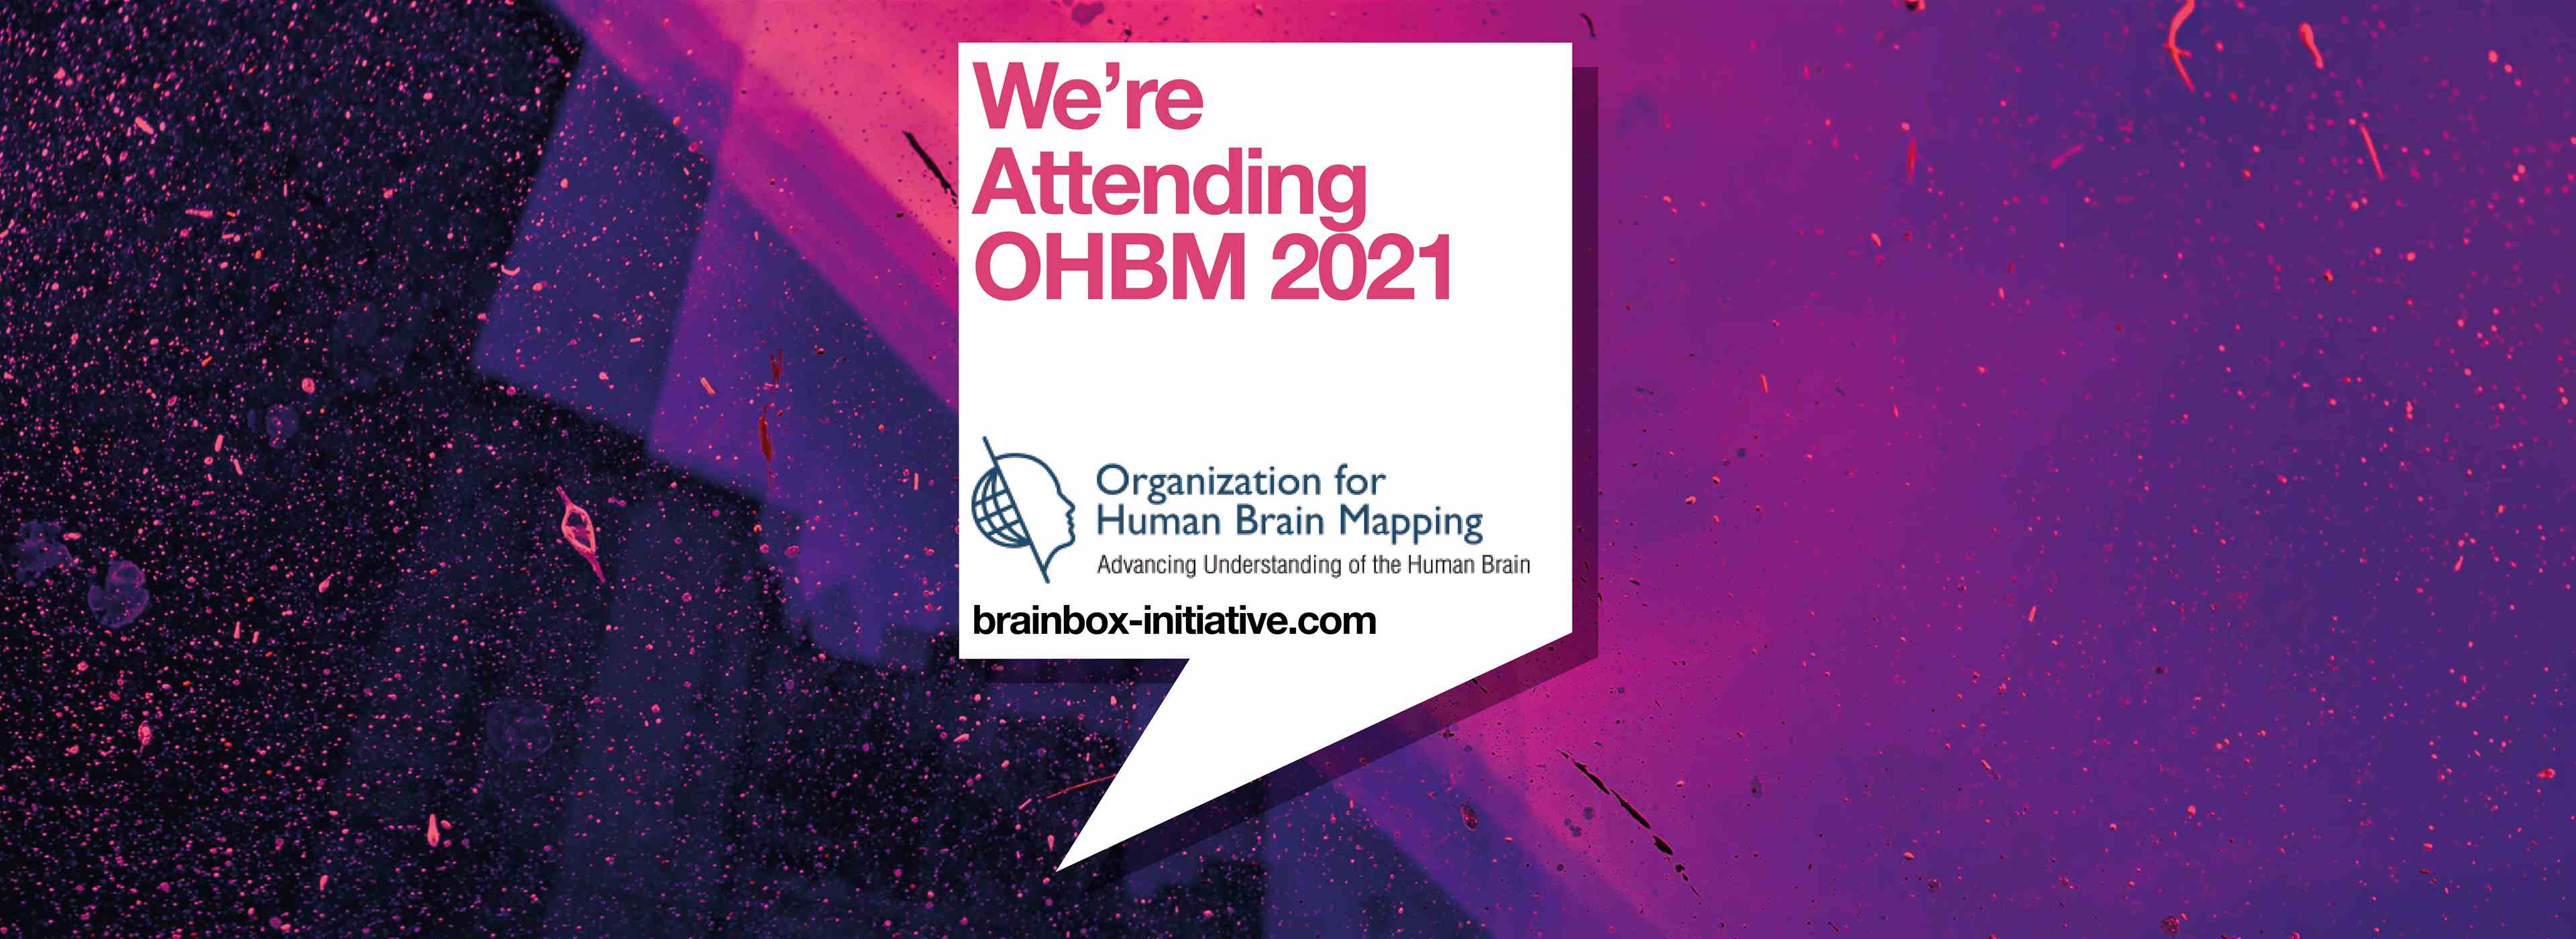 We're Exhibiting at OHBM 2021 Brainbox Initiative